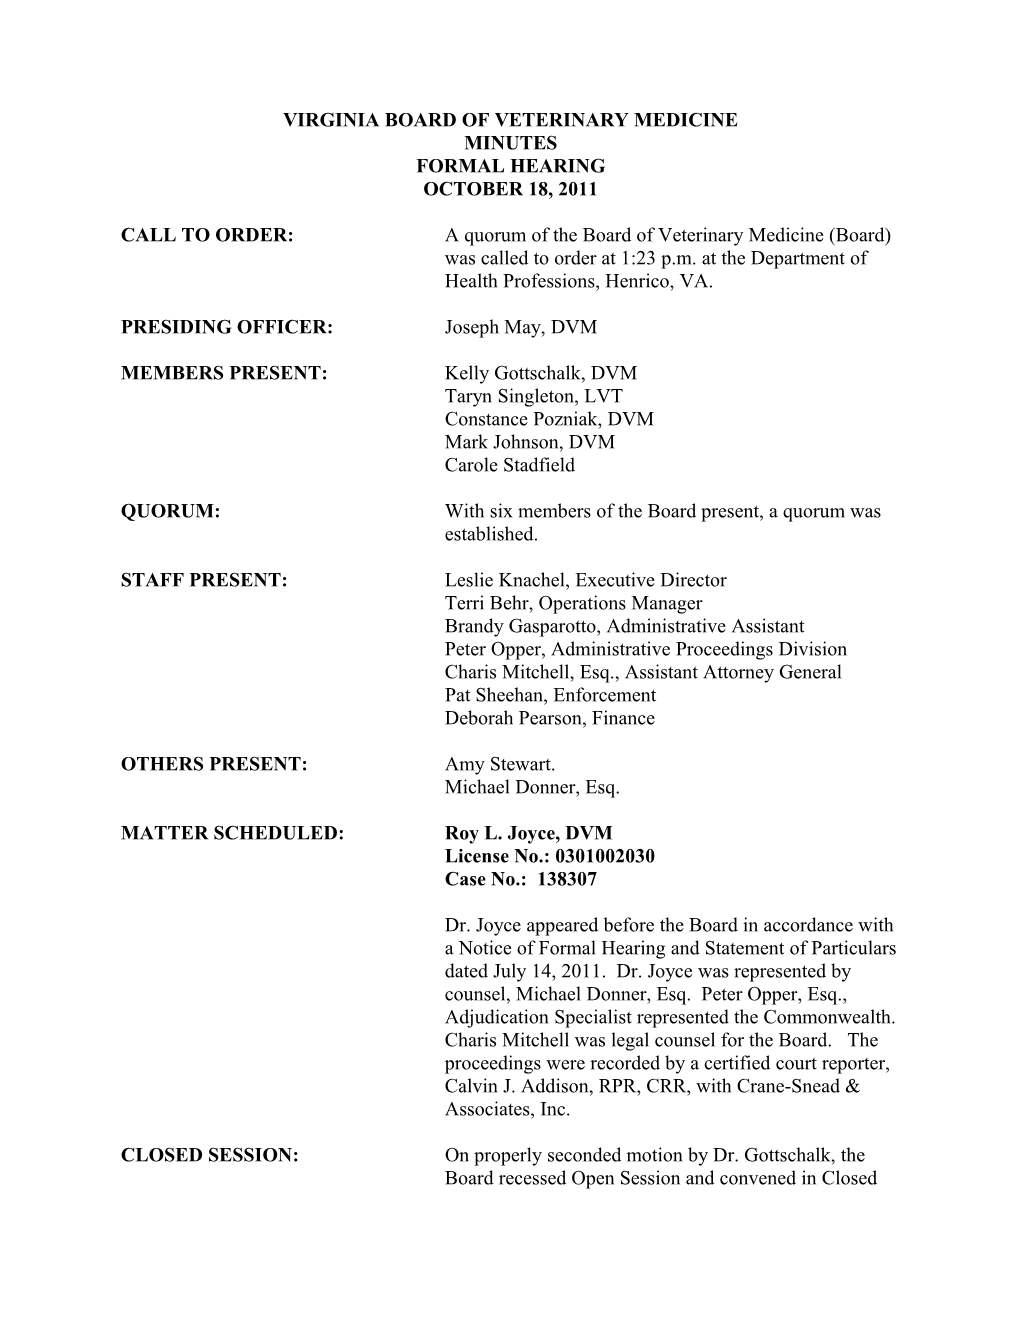 Board of Veterinary Medicine Minutes 10-18-2011